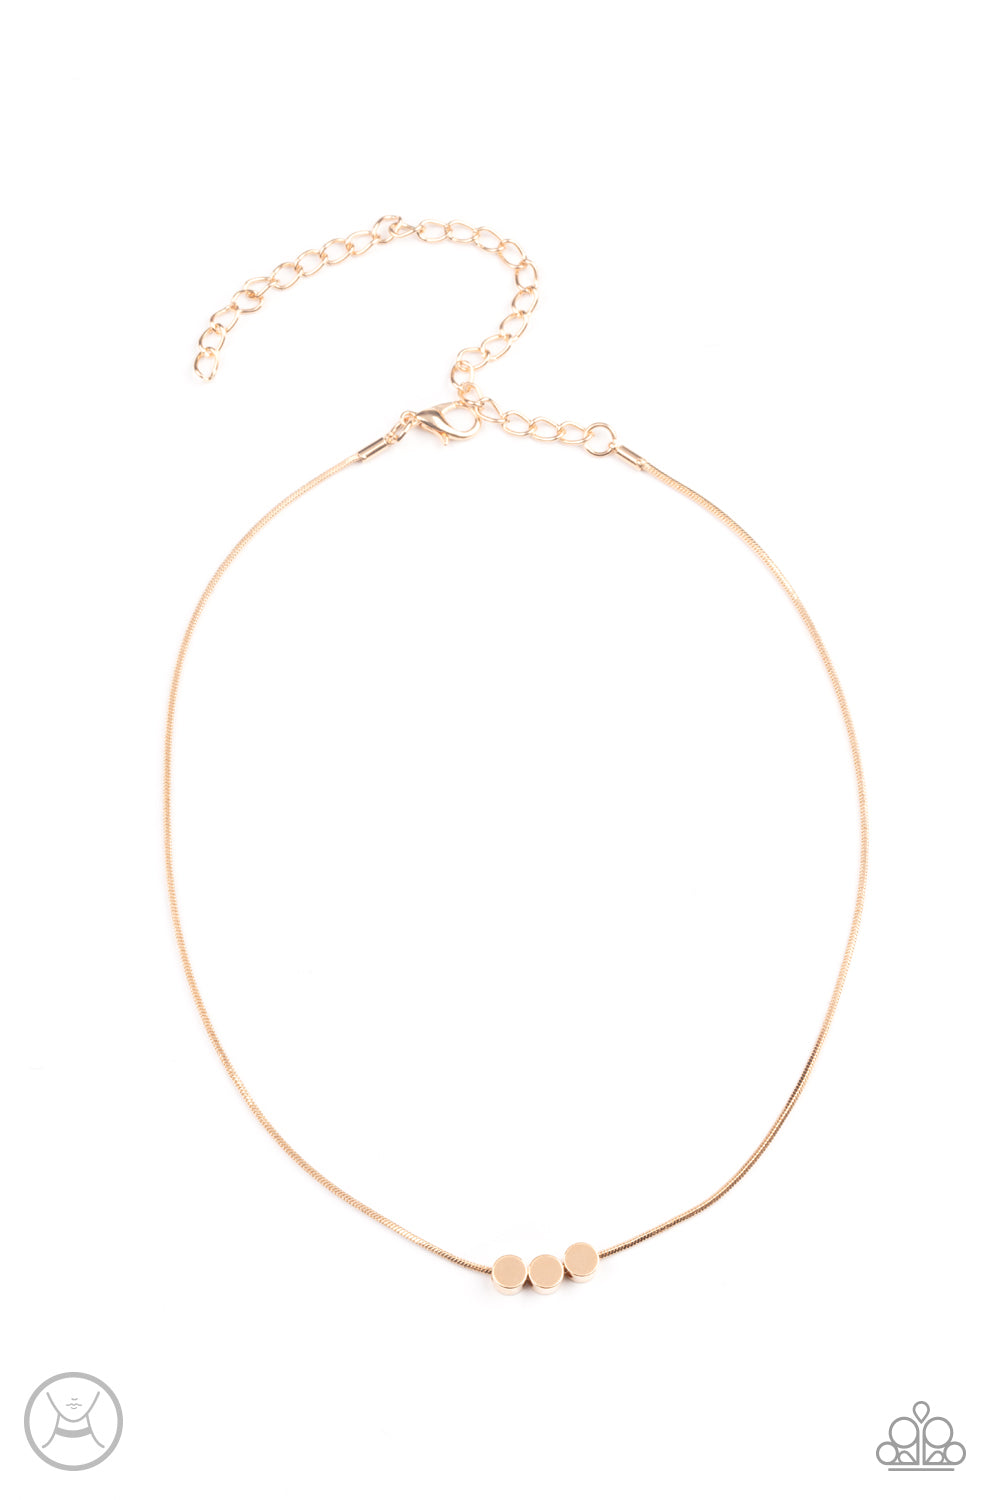 Dynamically Dainty - Gold Choker Necklace Set - Princess Glam Shop